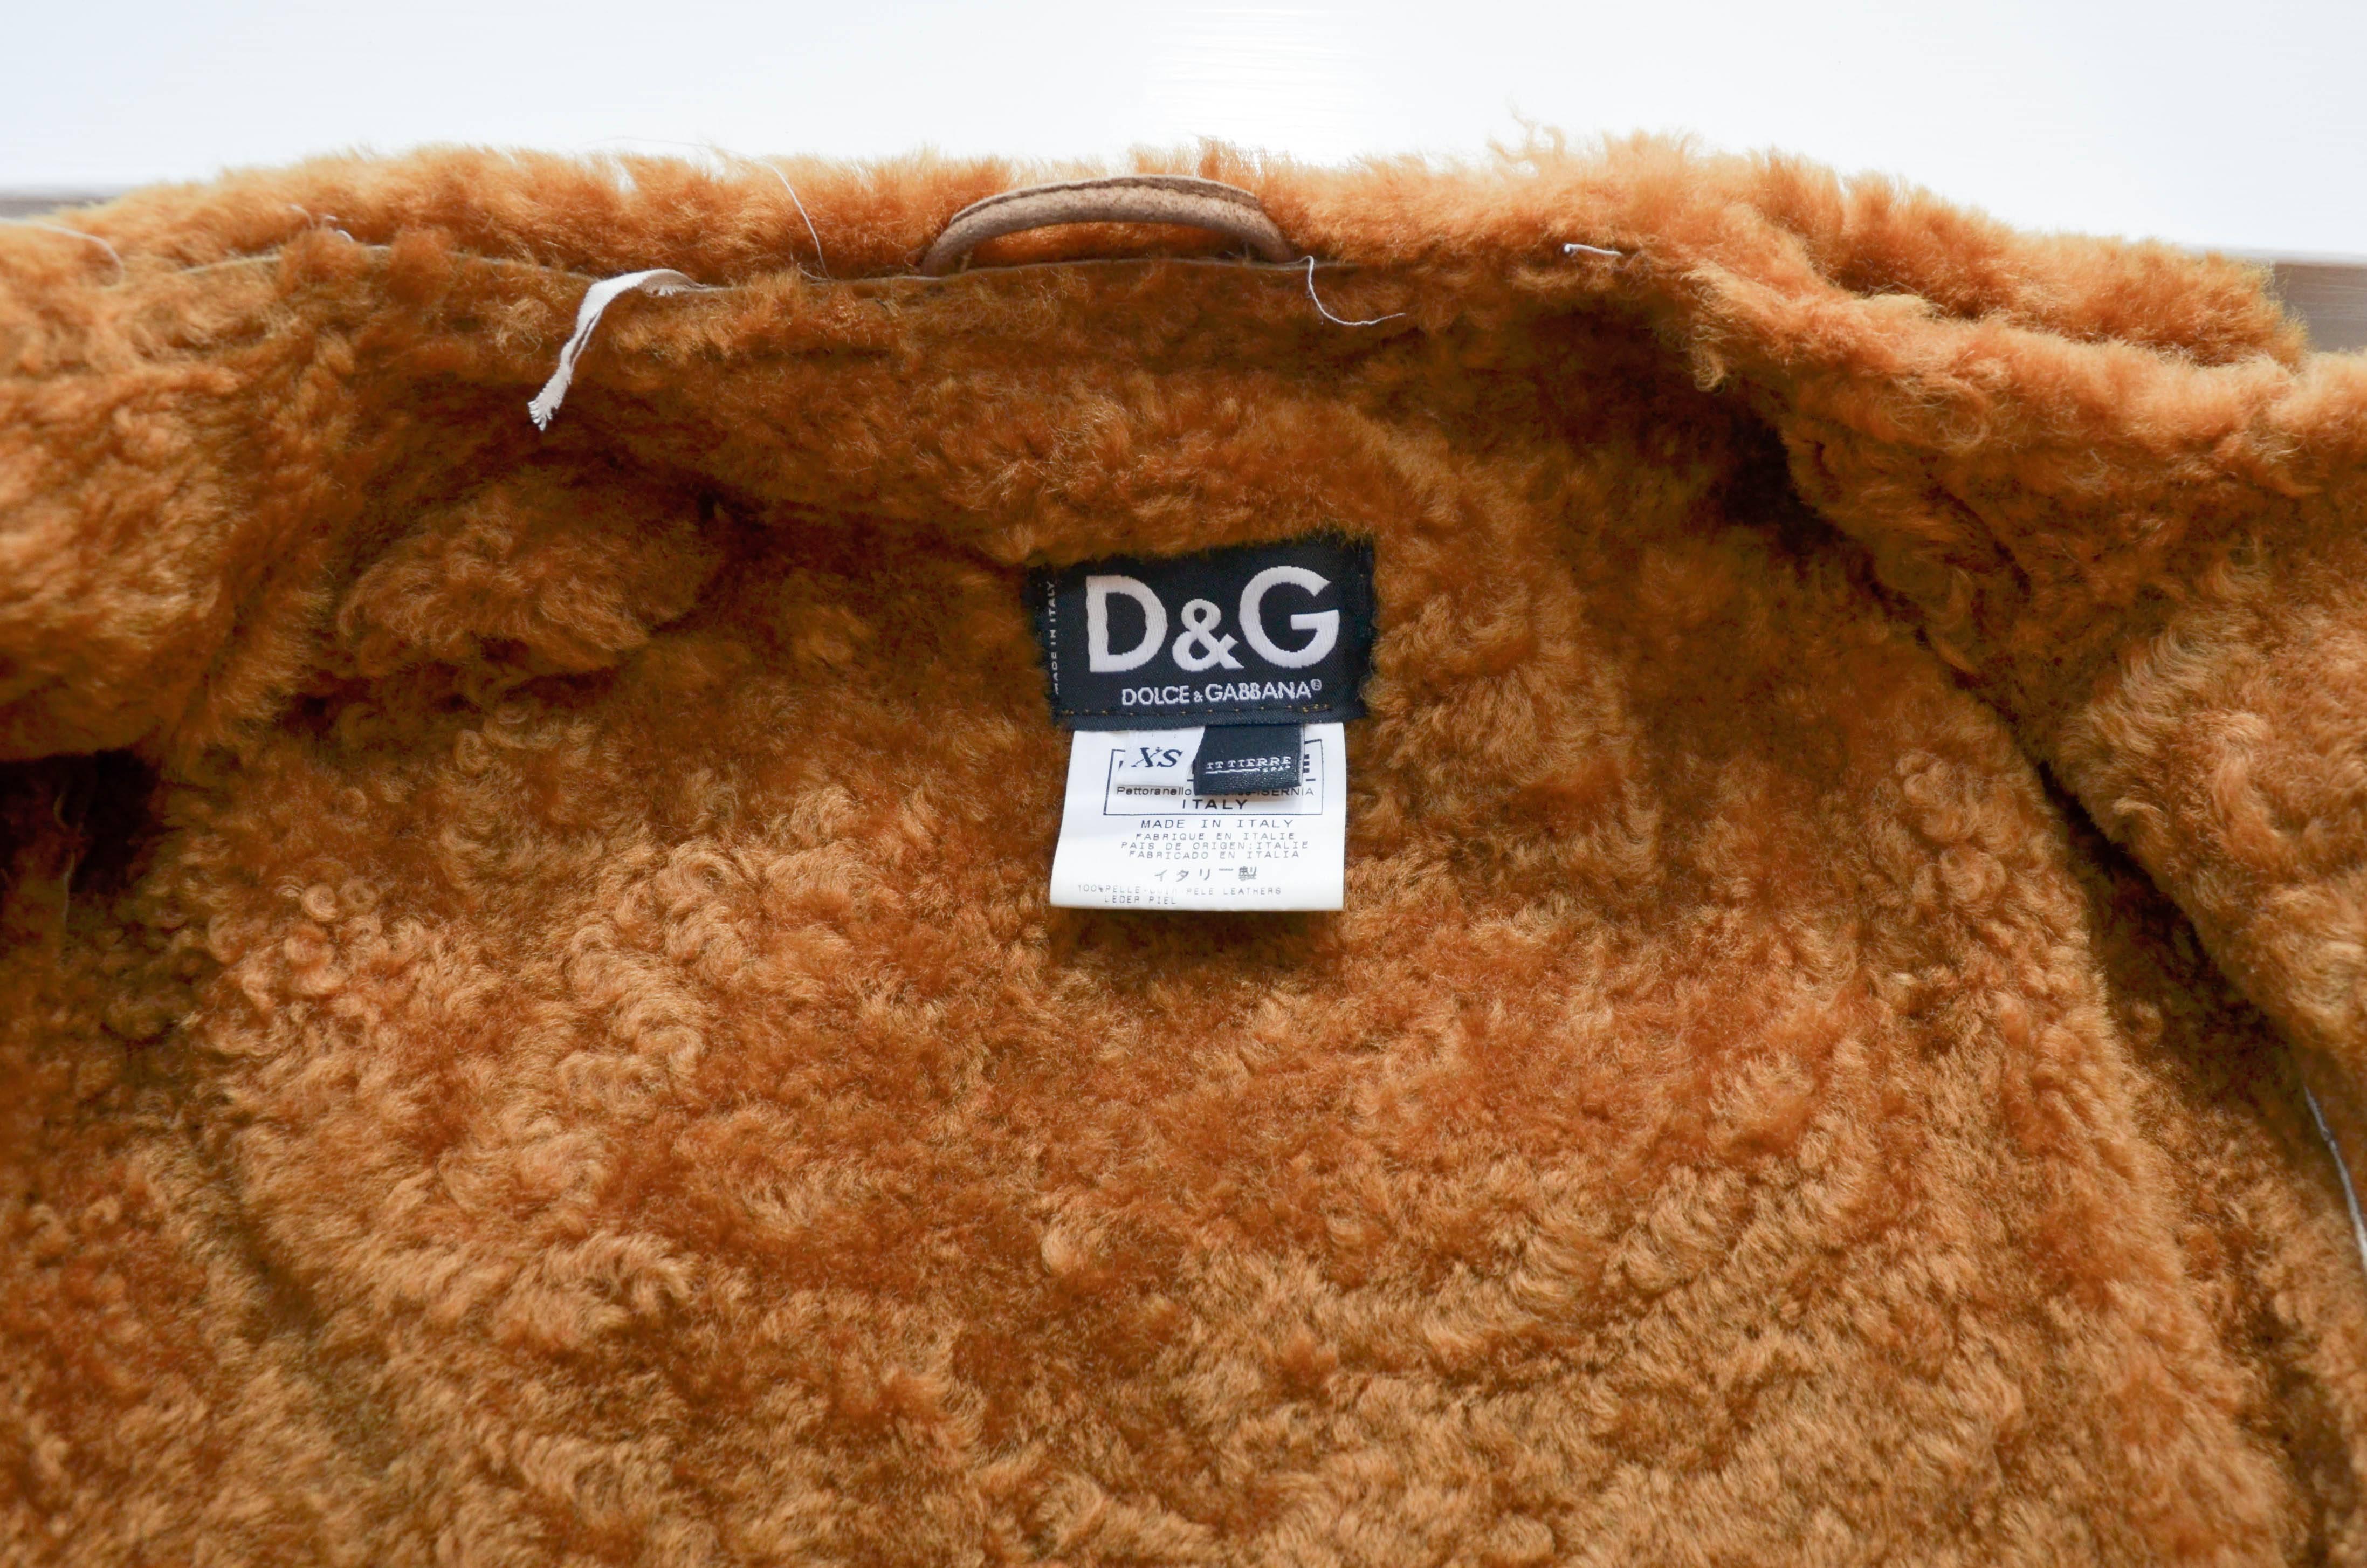 Dolce & Gabbana D & G Shearling Golden Brown Fur Coat 1